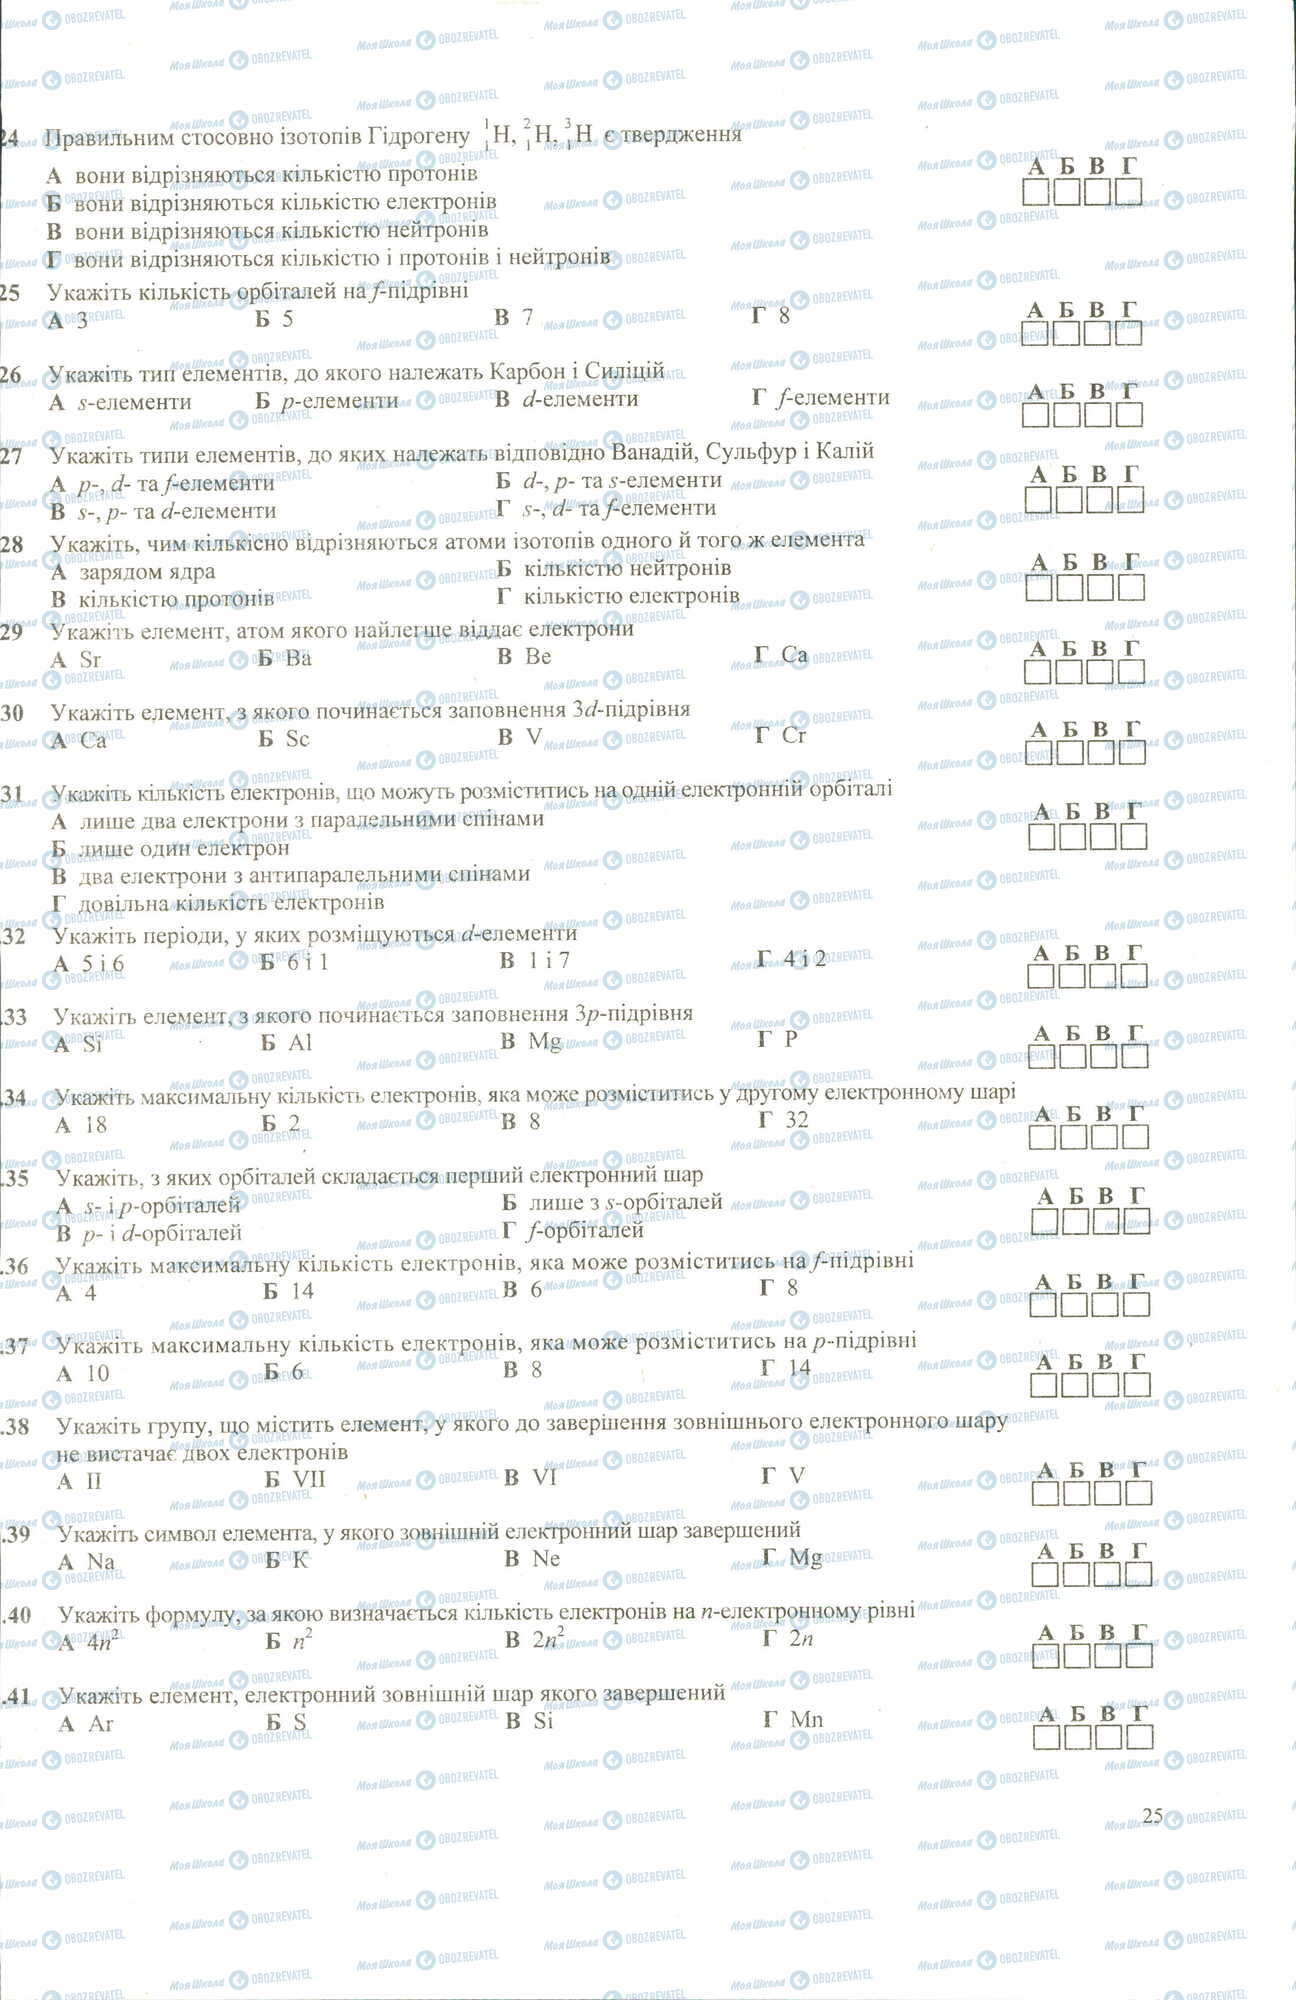 ЗНО Химия 11 класс страница 24-41